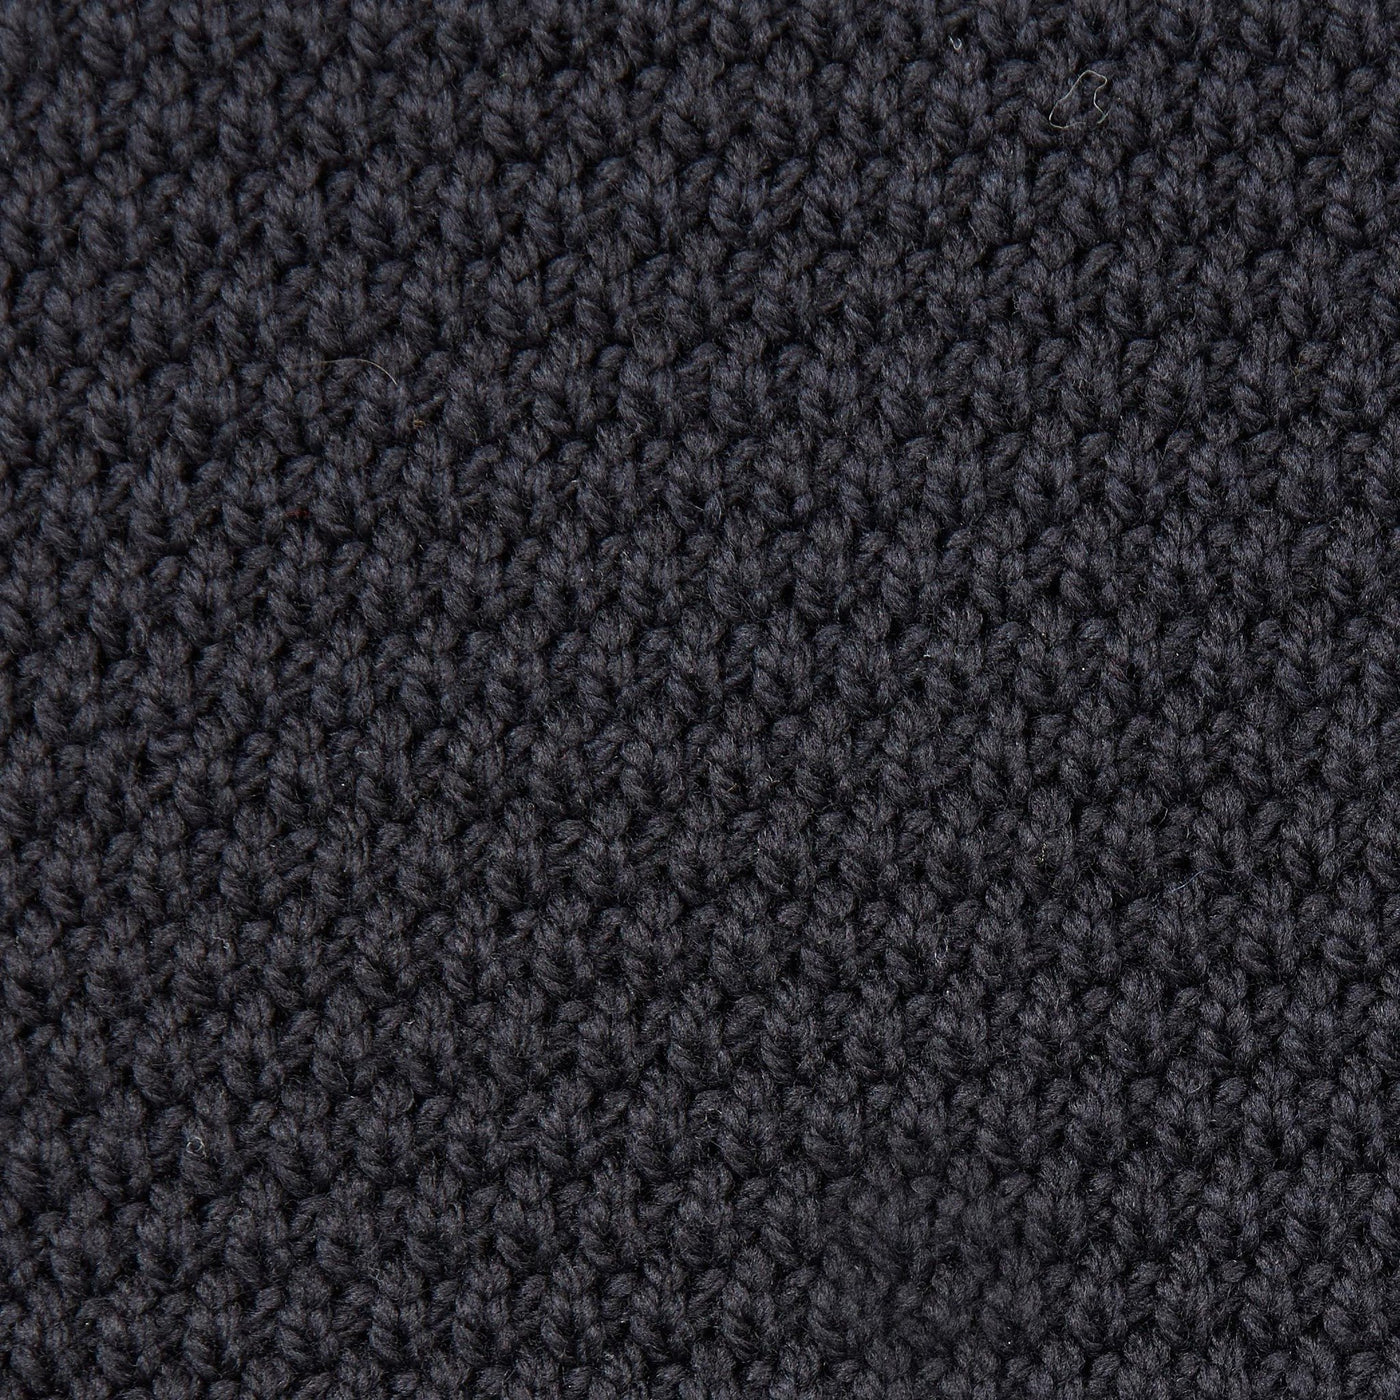 mens black merino wool moss stitch jumper close up